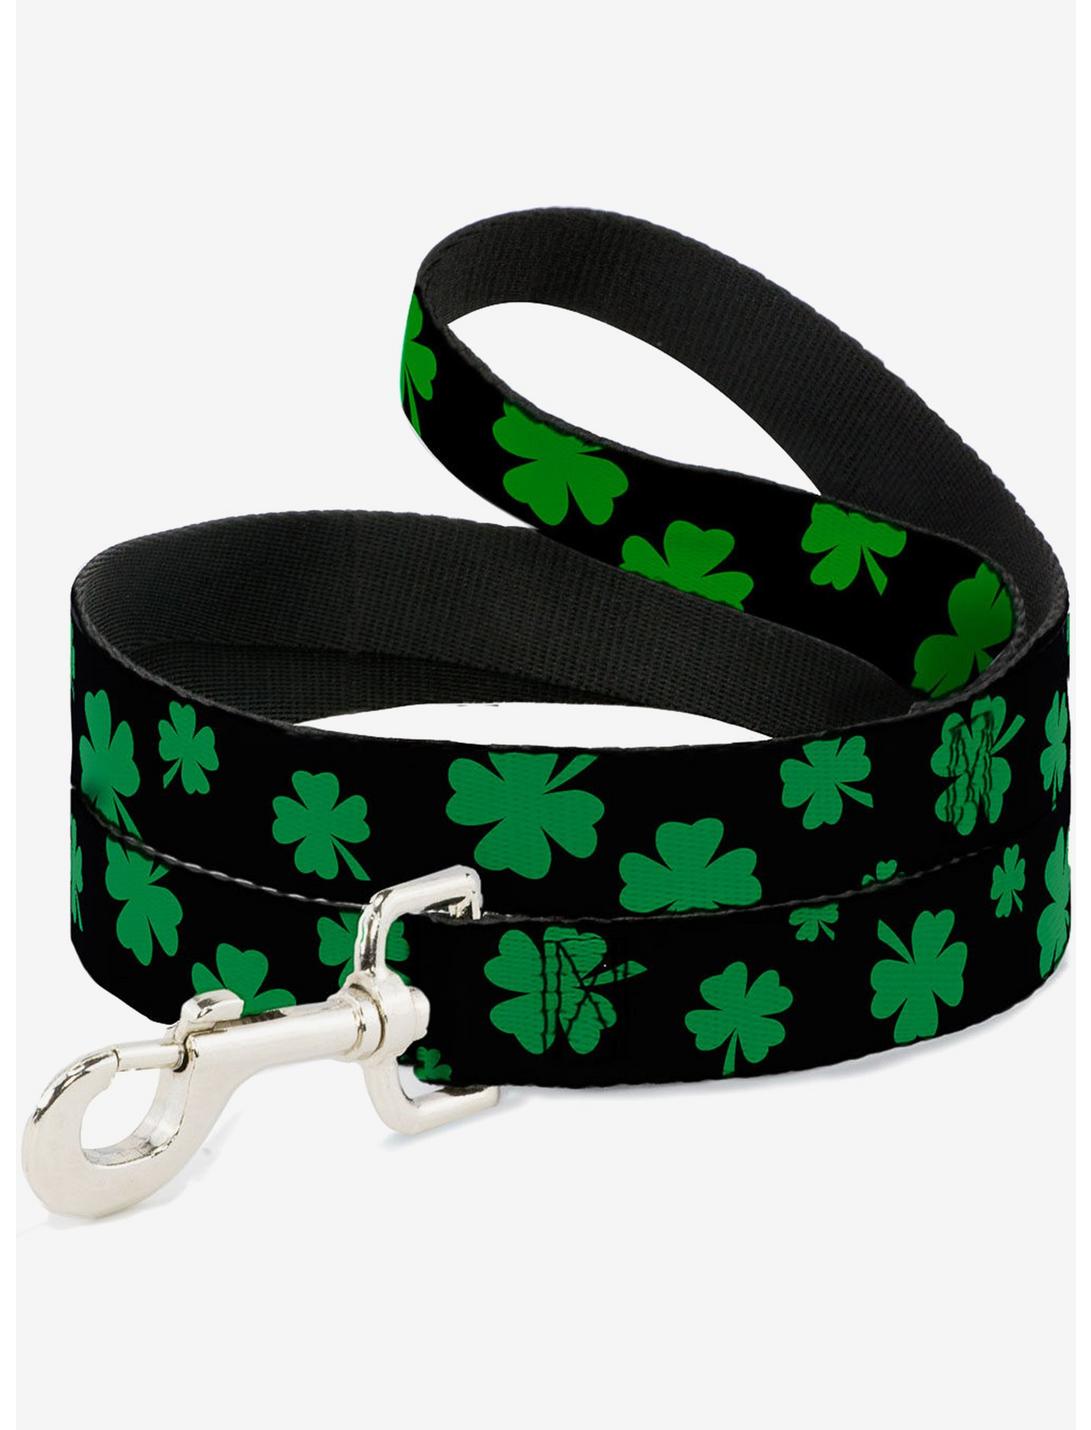 St. Patrick's Day Clovers Scattered Black Green Dog Leash, , hi-res